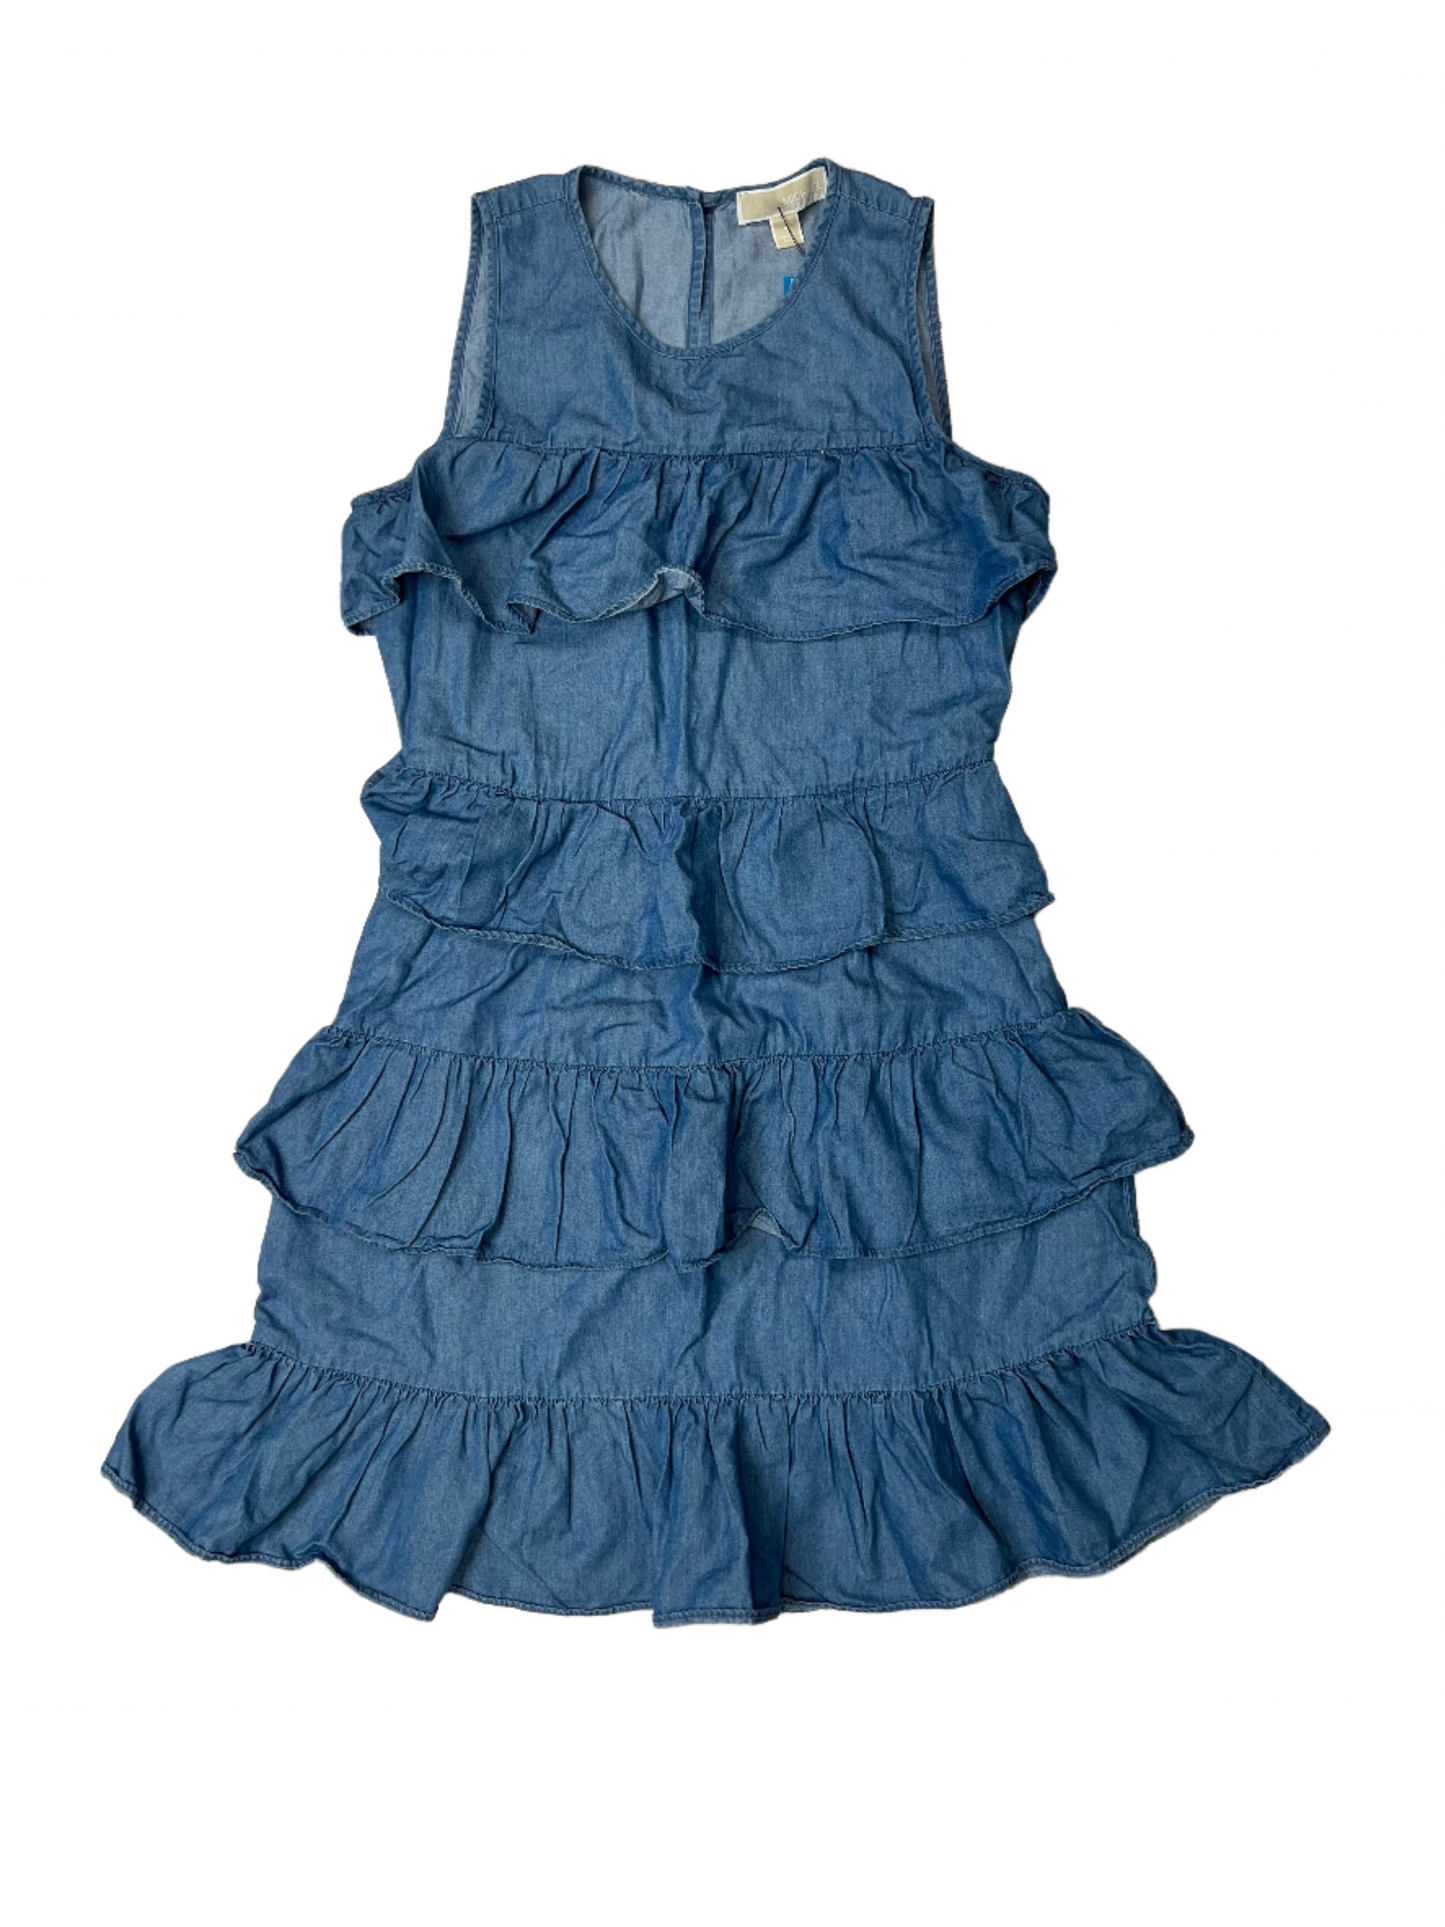 Dress Designer By Michael Kors  Size: S